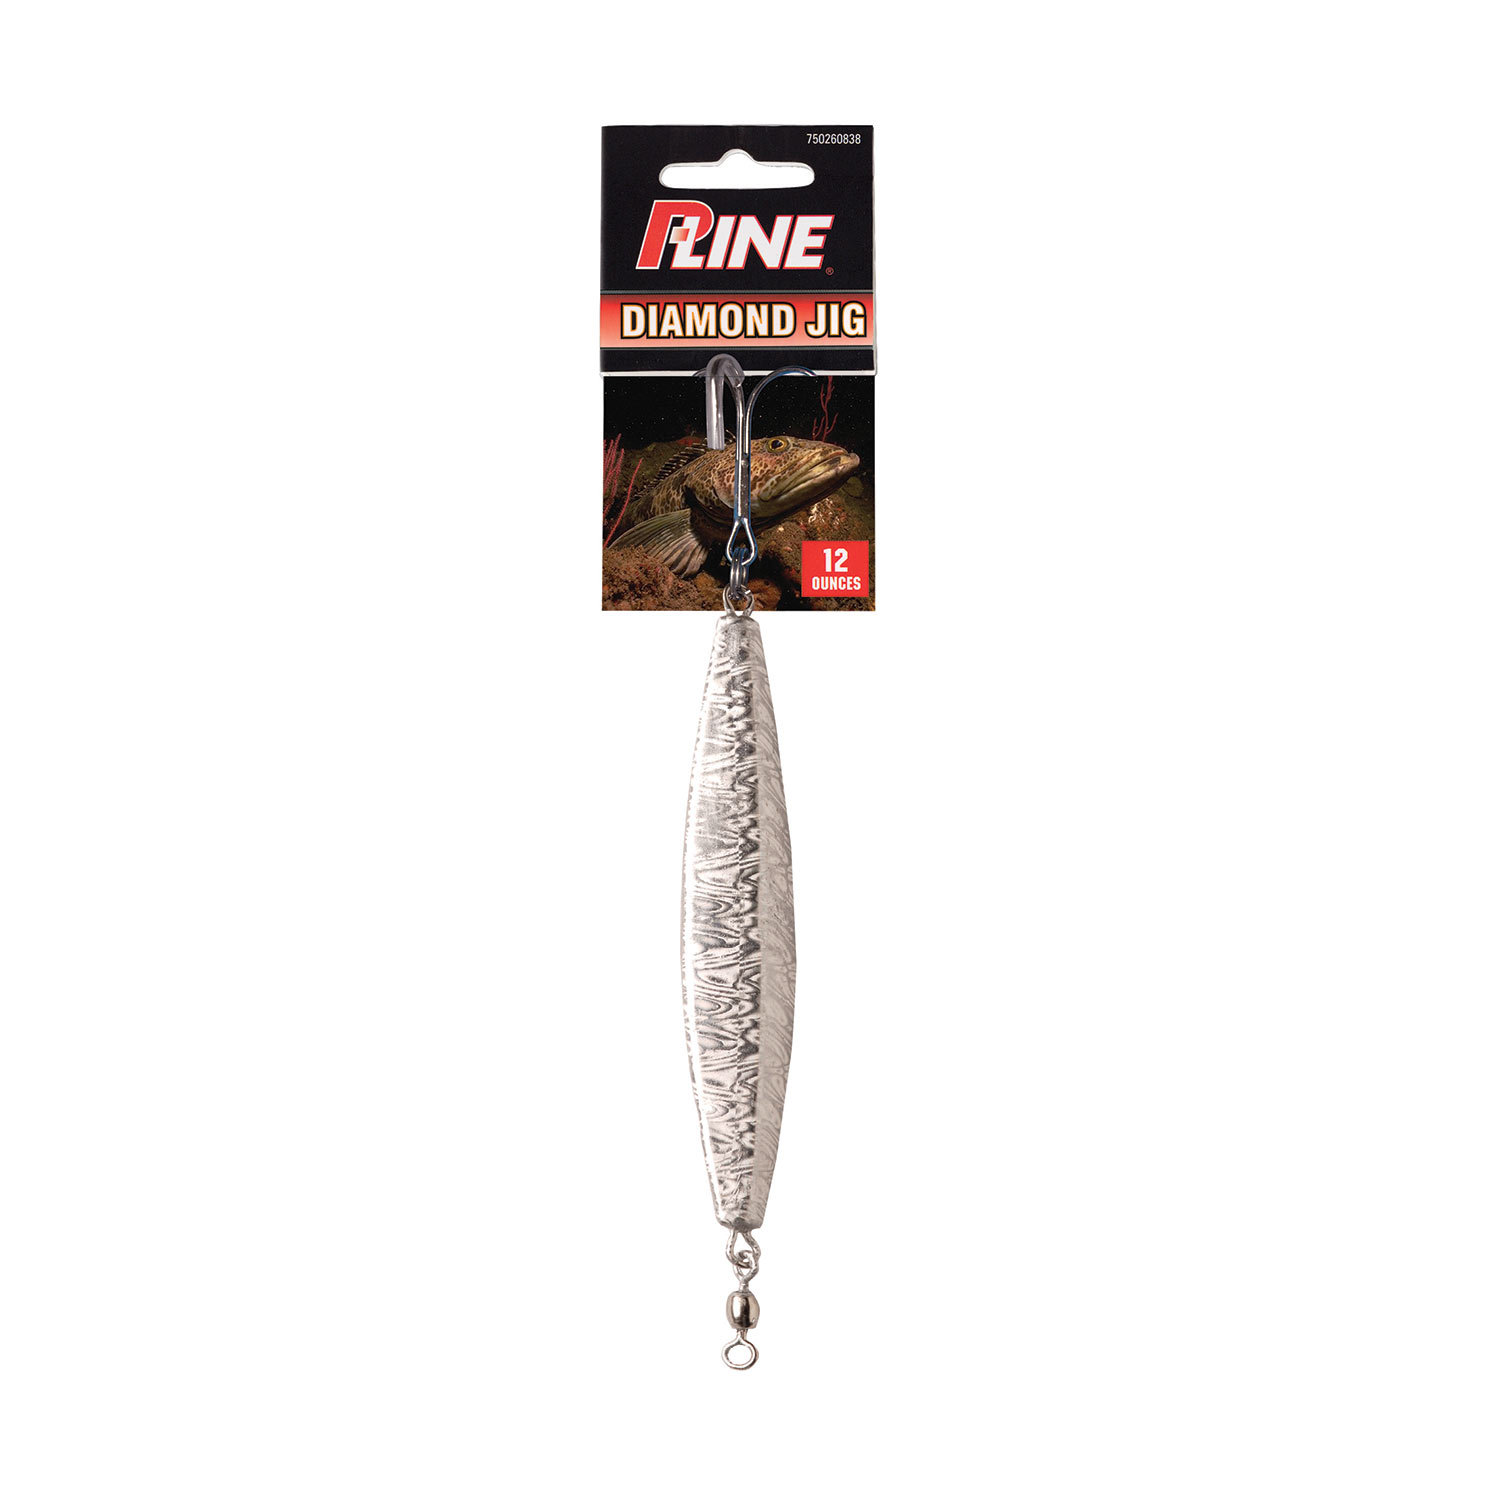 P-LINE Diamond Bar Fishing Jig, 6 oz.